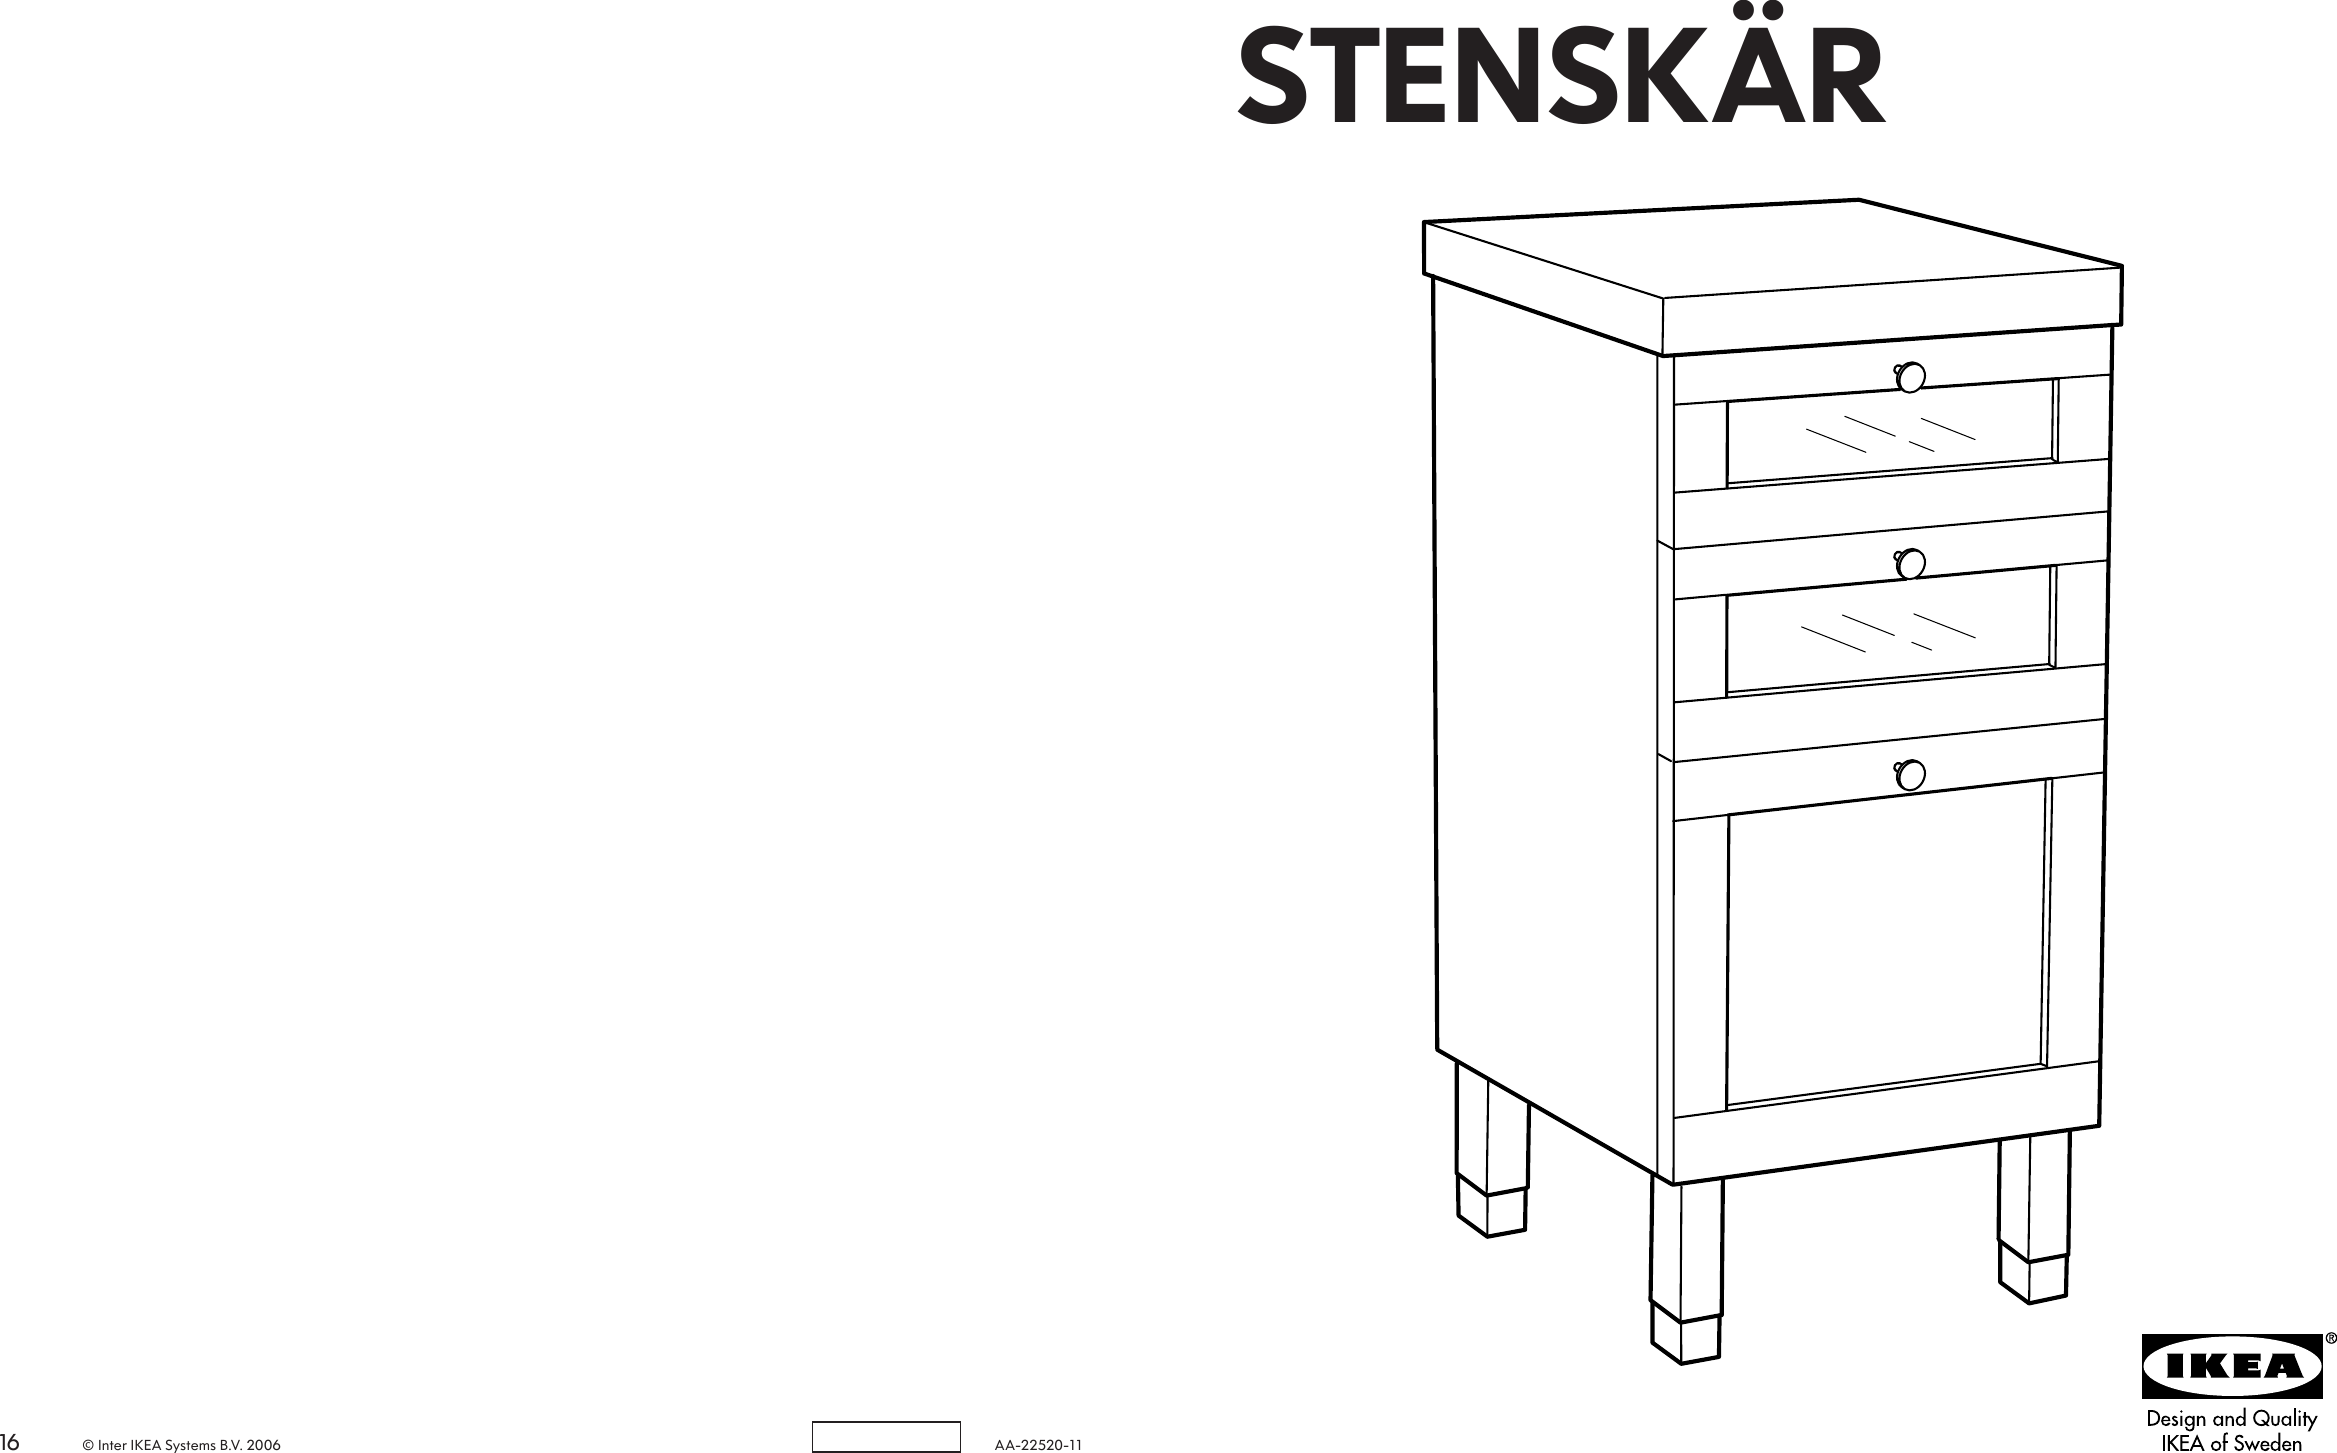 IkeaStenskarDrawUnitAssemblyInstruction.1313043034 User Guide Page 1 